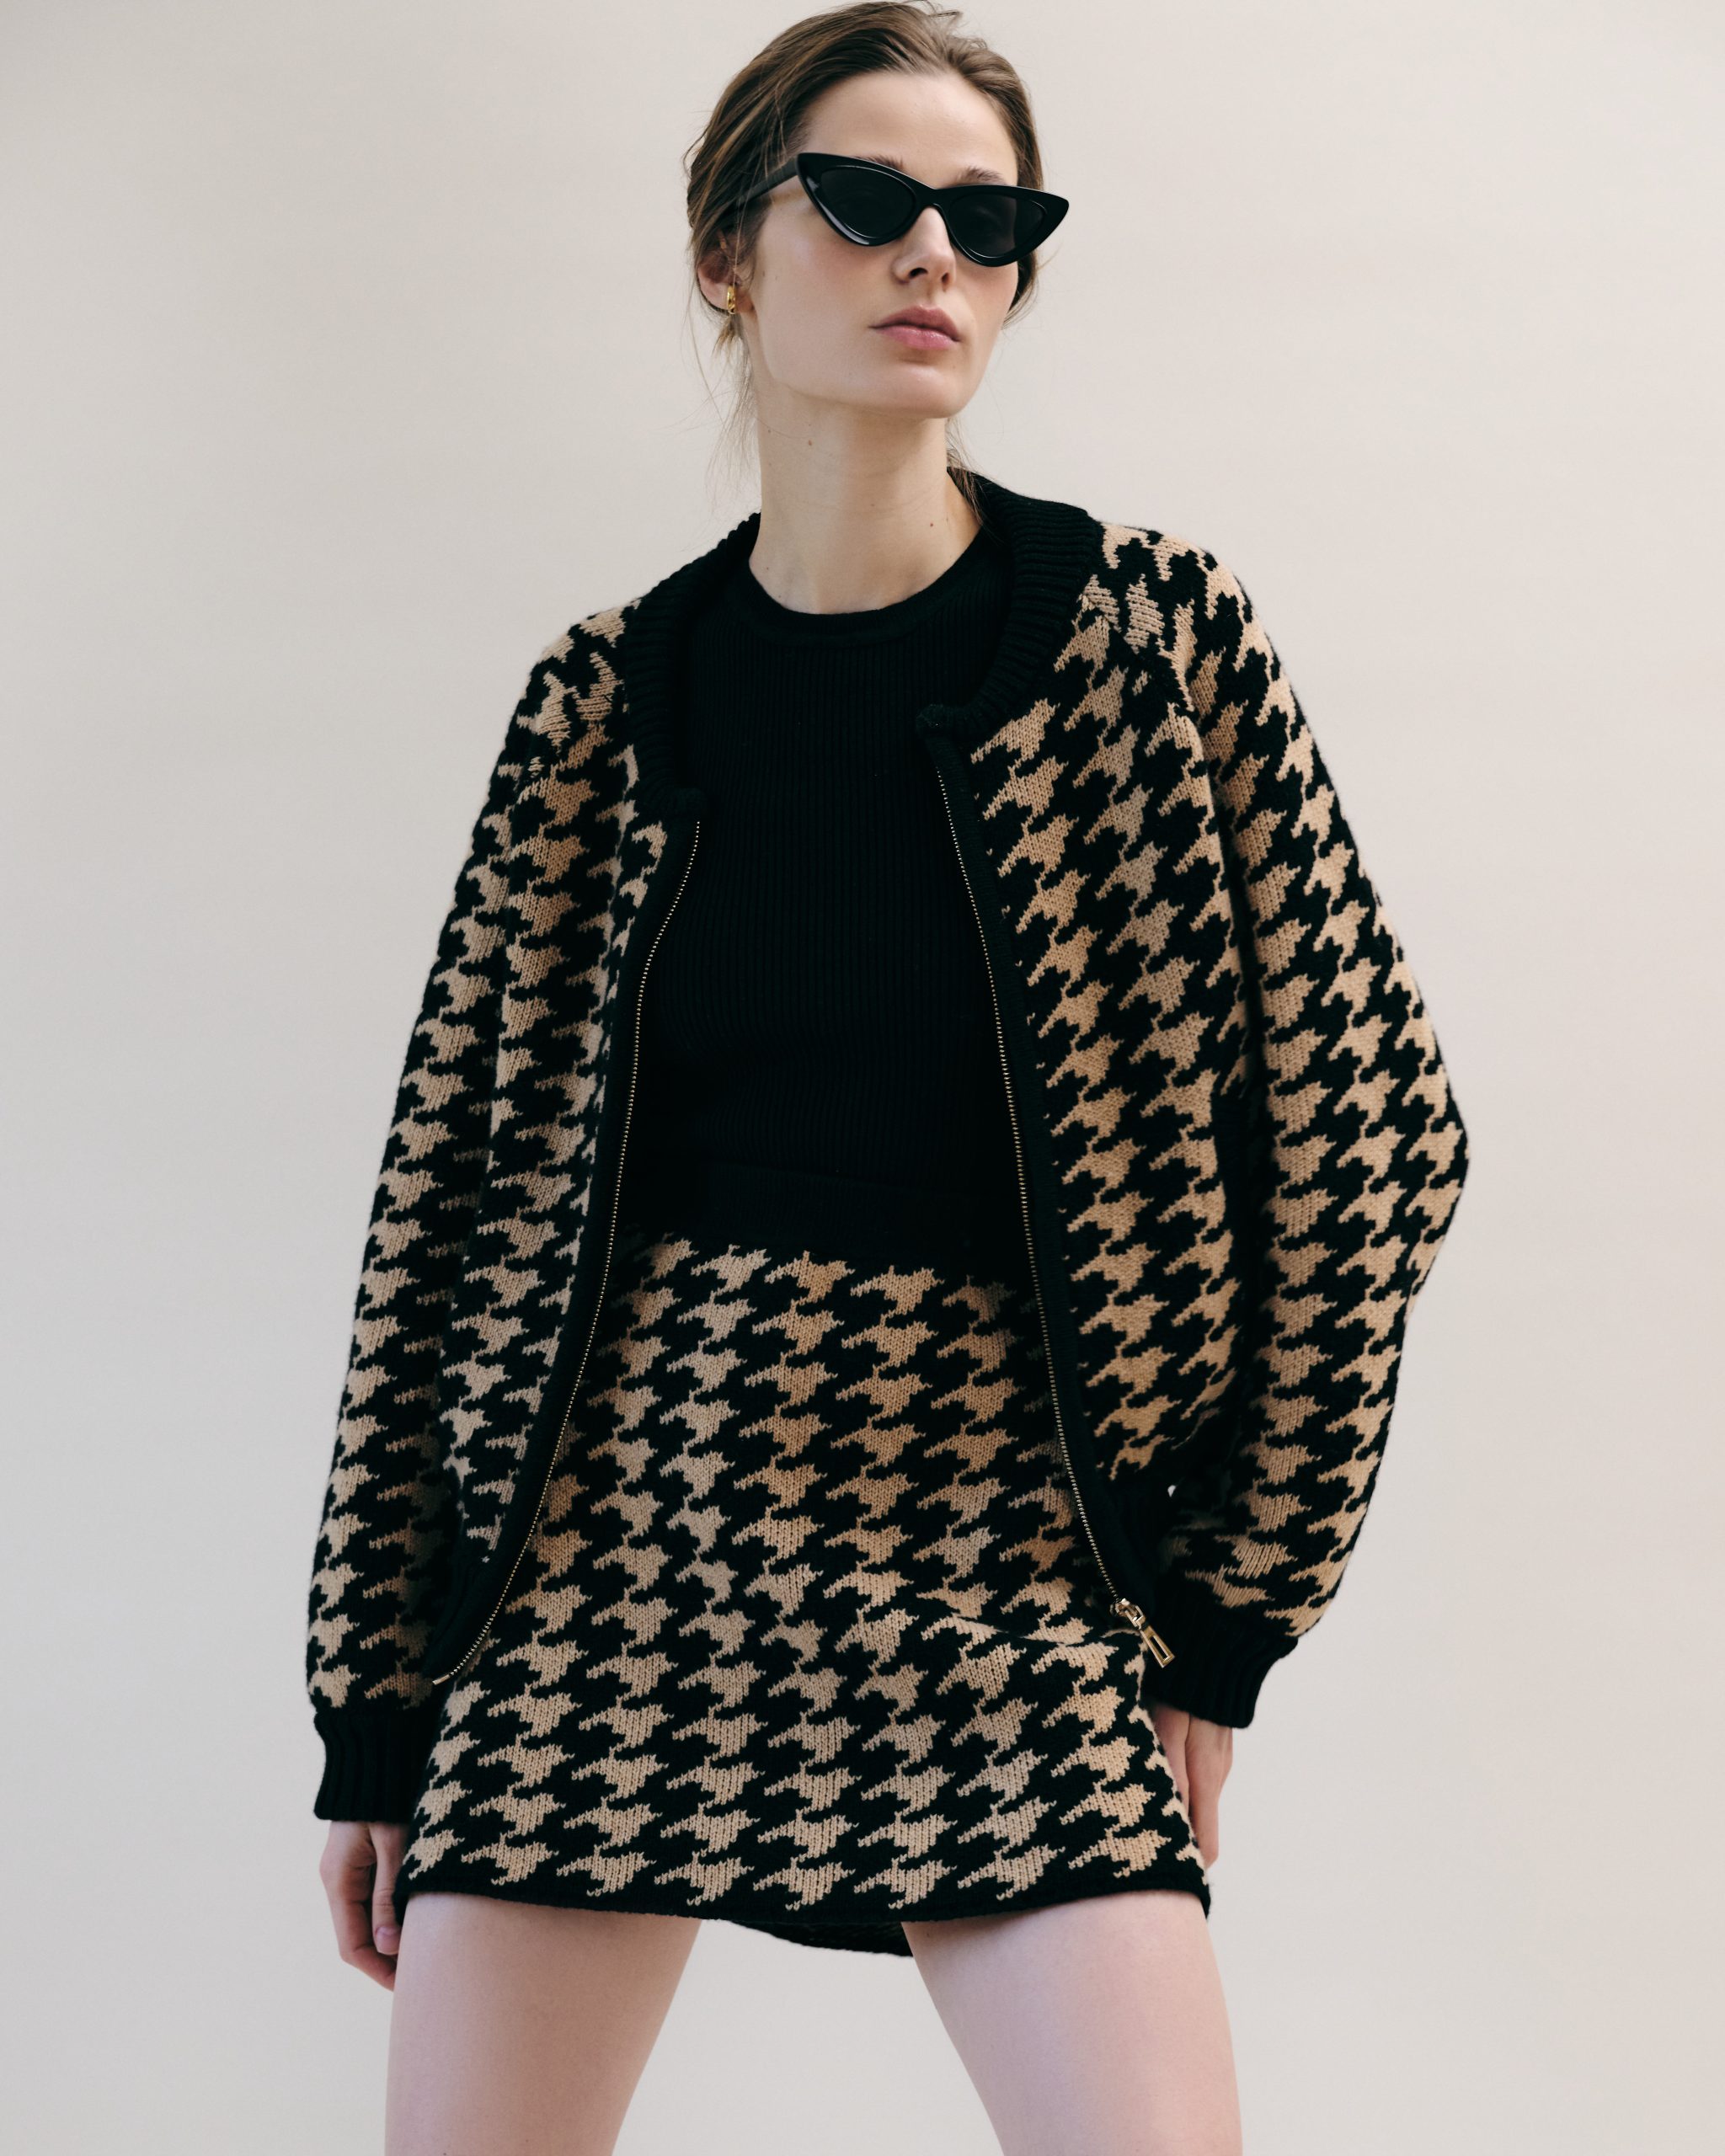 Houndstooth Mini Skirt, Black and Warm Sand - AmiAmalia Luxury Knitwear